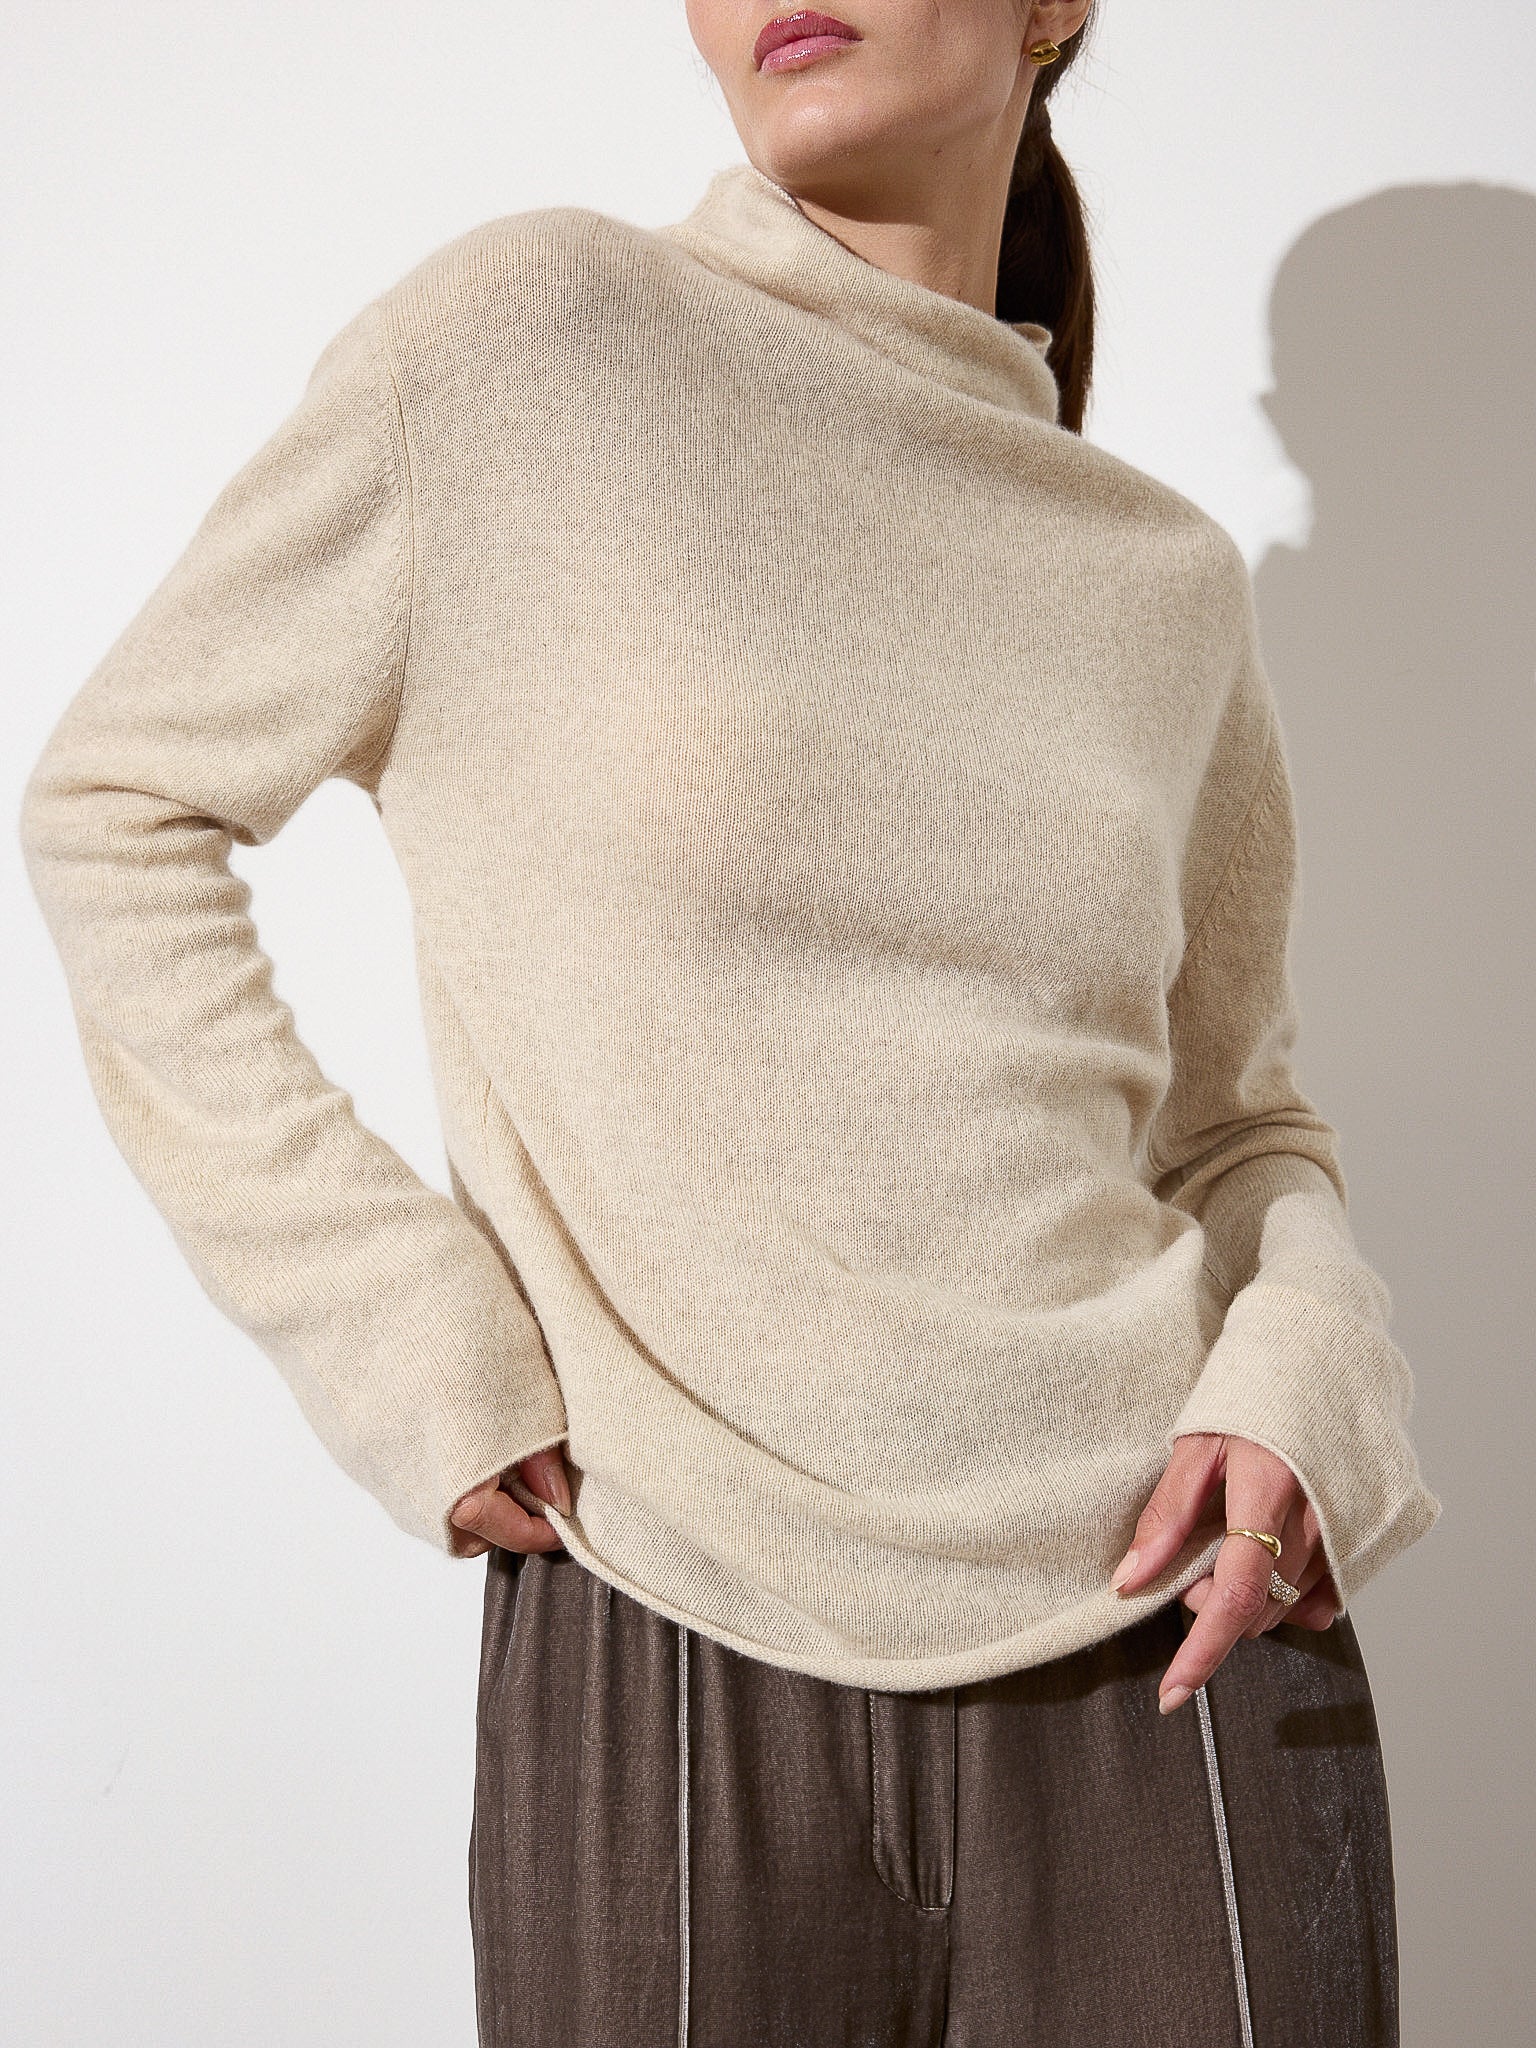 Rhone funnel neck beige sweater front view 